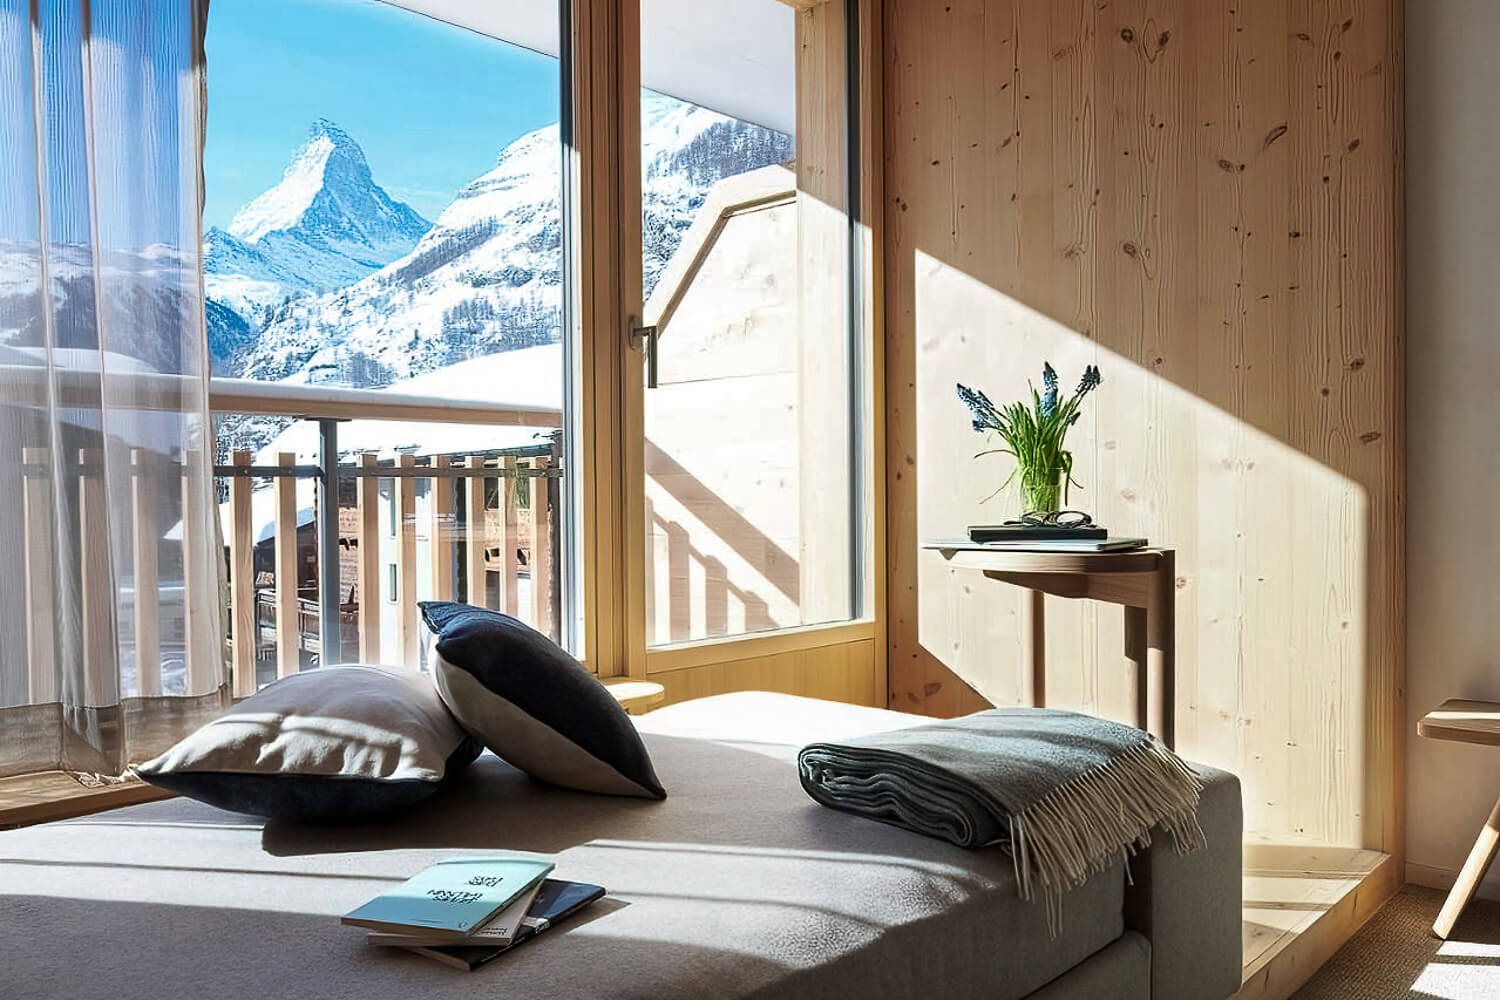 Carina - Design & Lifestyle Hotel in Zermatt